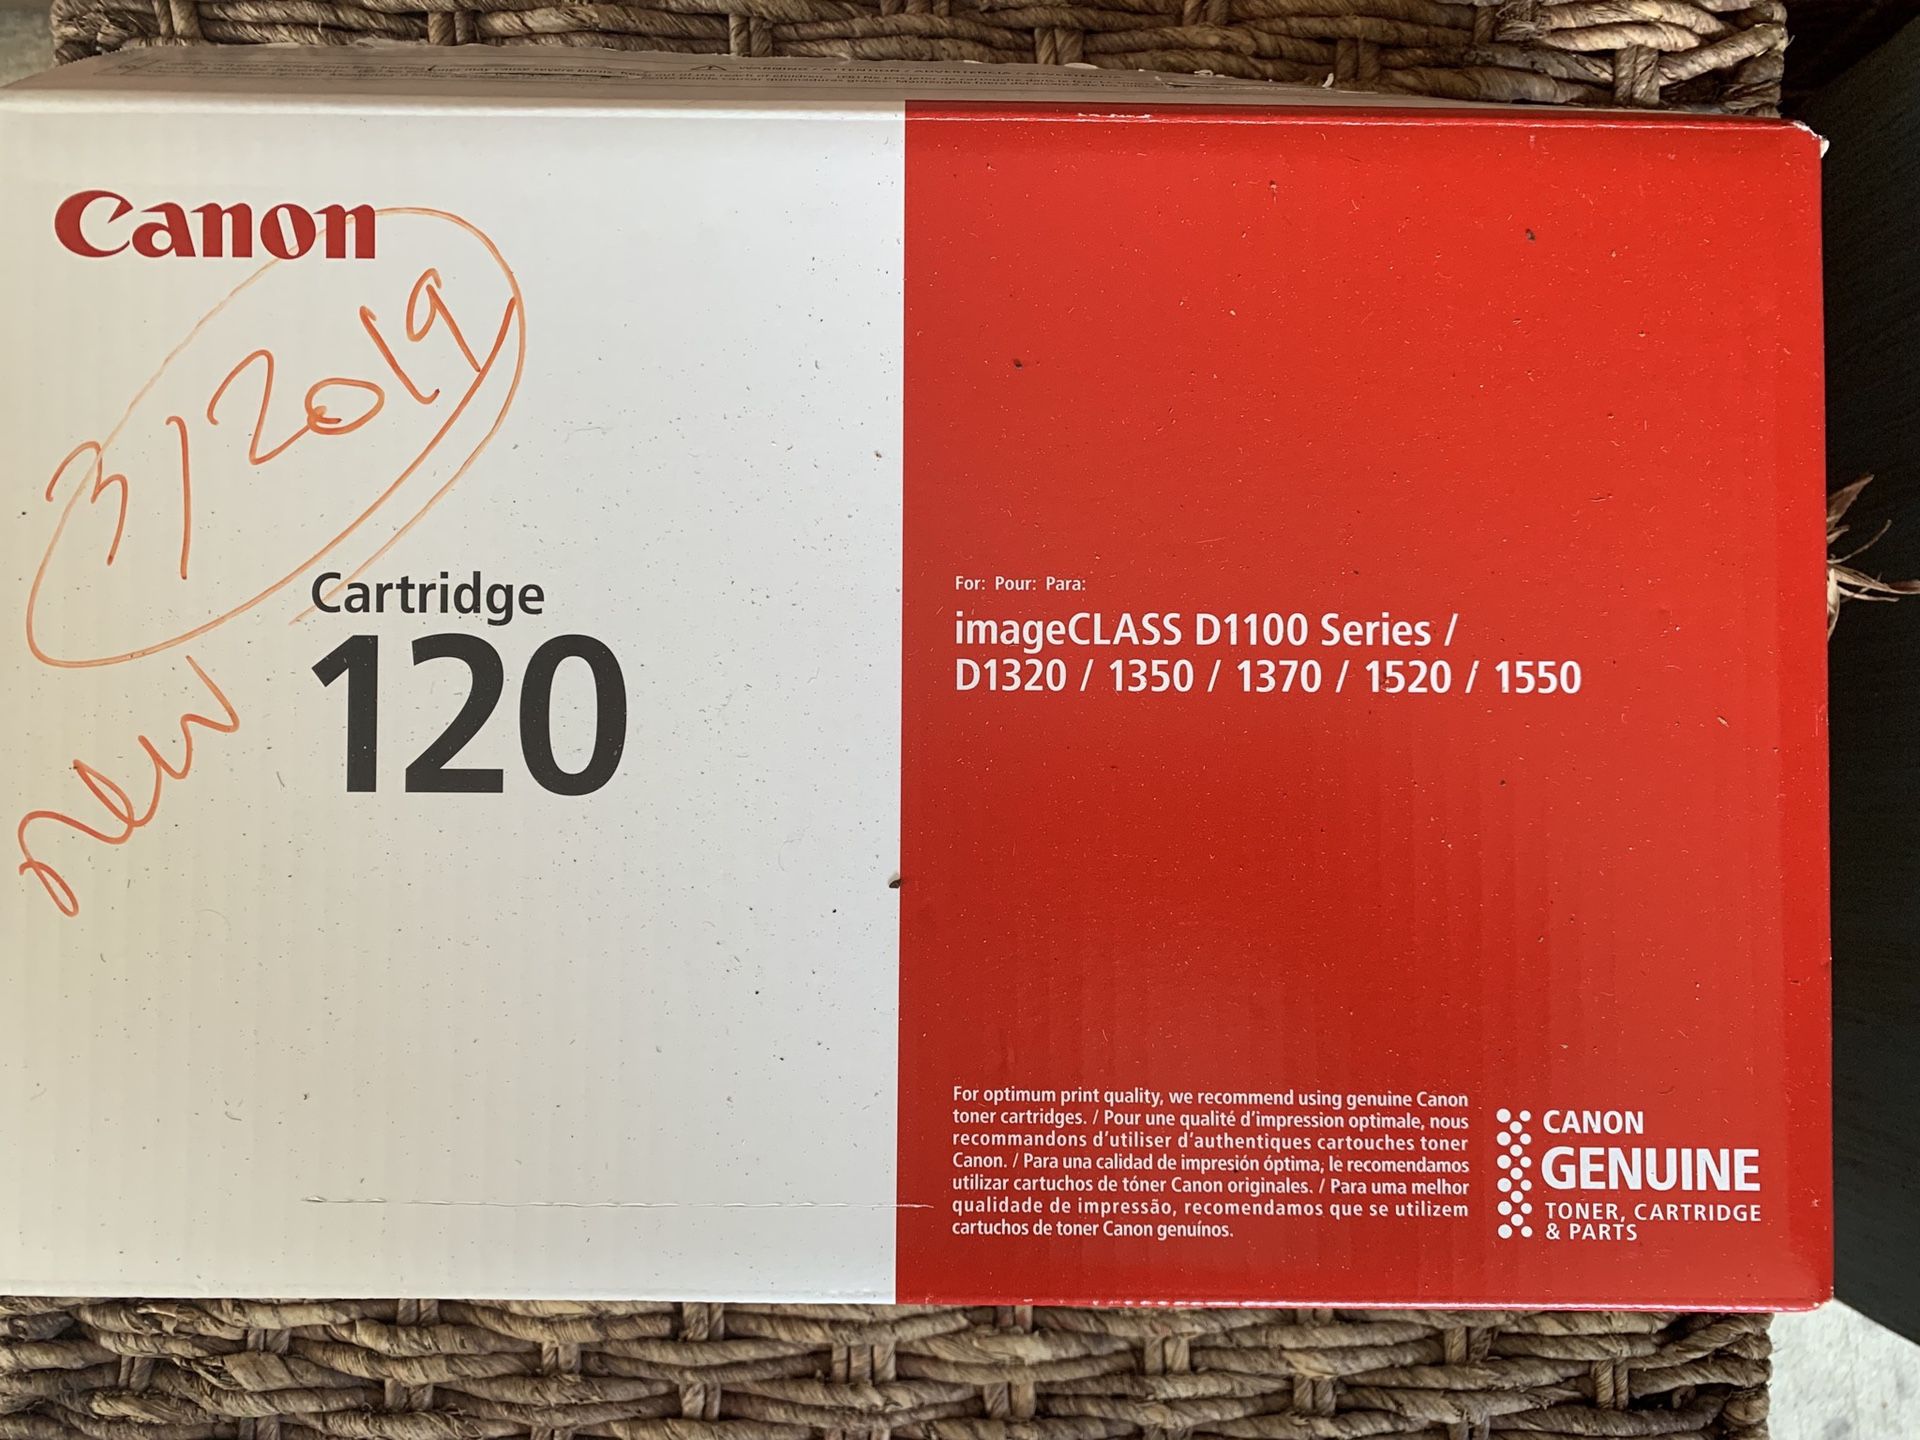 Cannon Printer Toner Cartridge 120